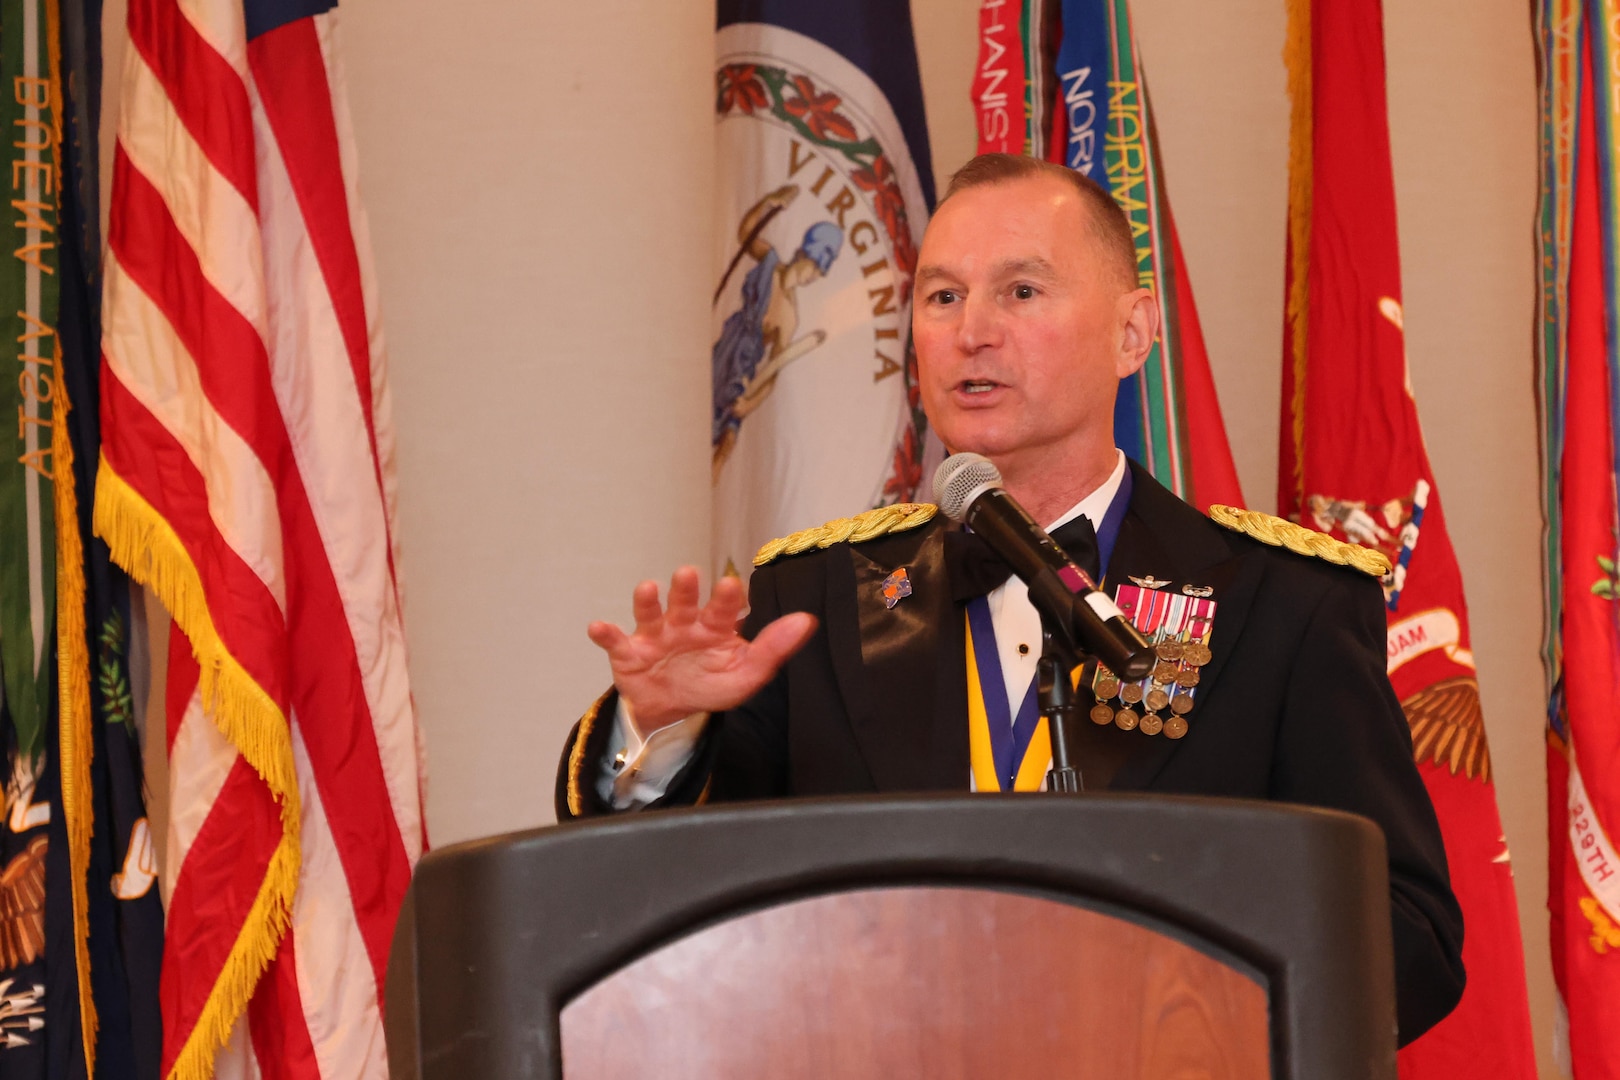 Army leader at podium speaking